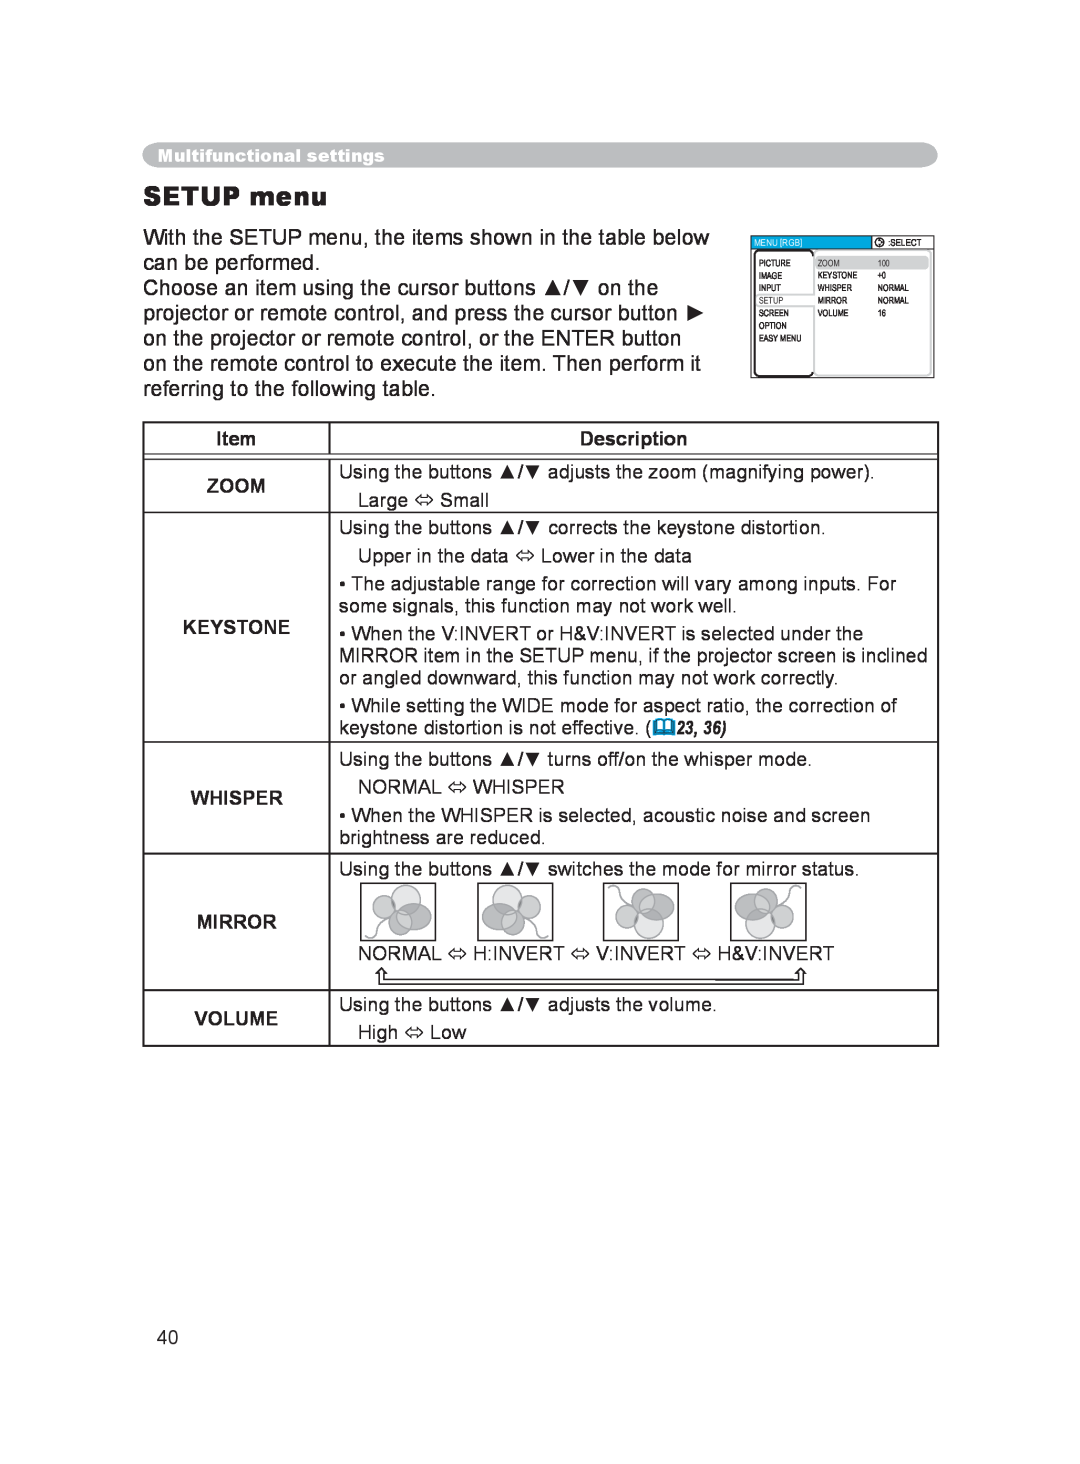 Hitachi PJ-LC9 user manual SETUP menu, Description, Zoom, Keystone, Whisper, Mirror, Volume 